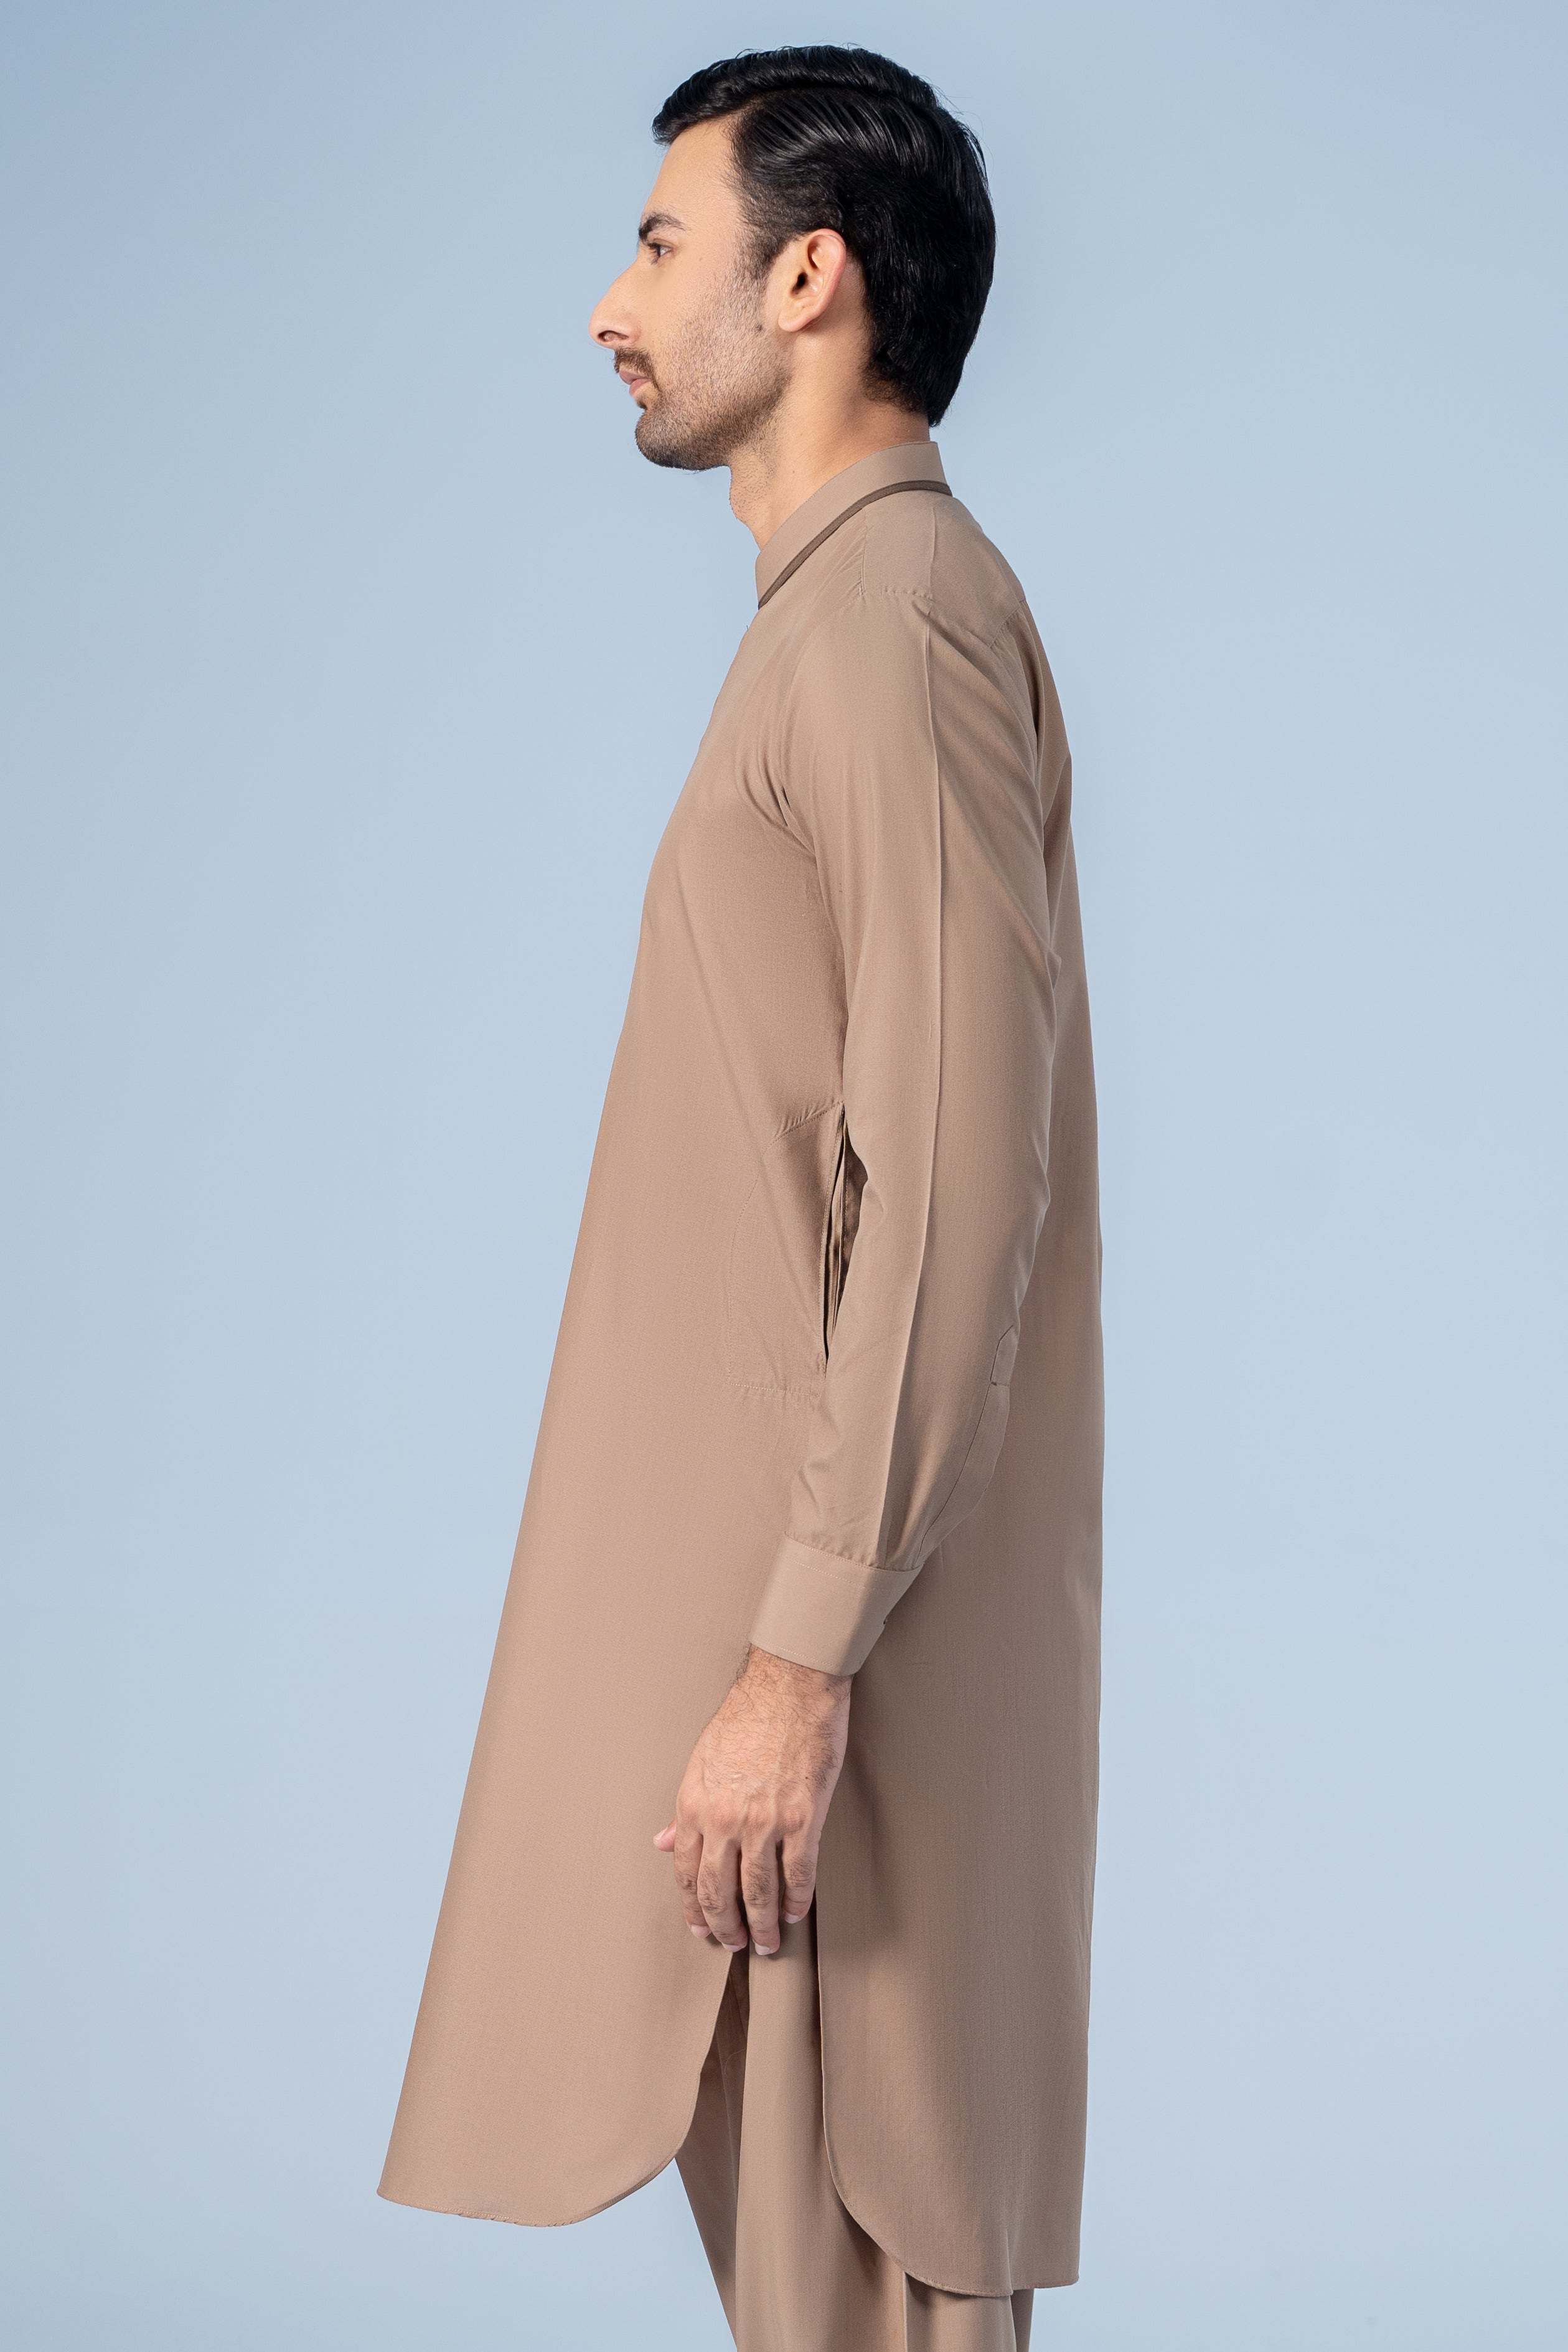 SHALWAR KAMEEZ KHAKI - Charcoal Clothing